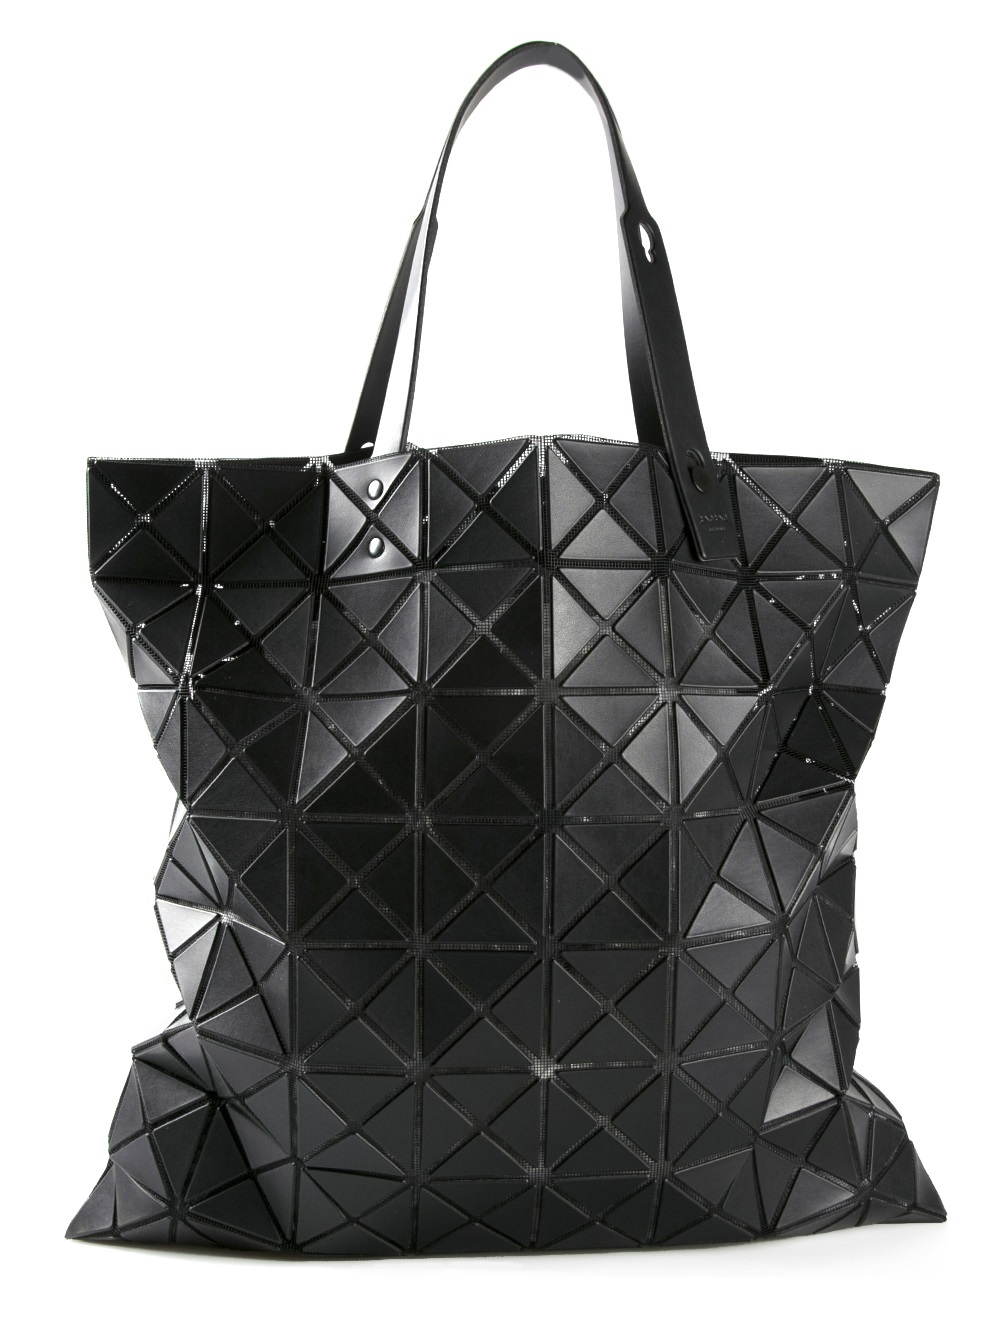 Bao Bao Issey Miyake Prism Bag in Black - Lyst